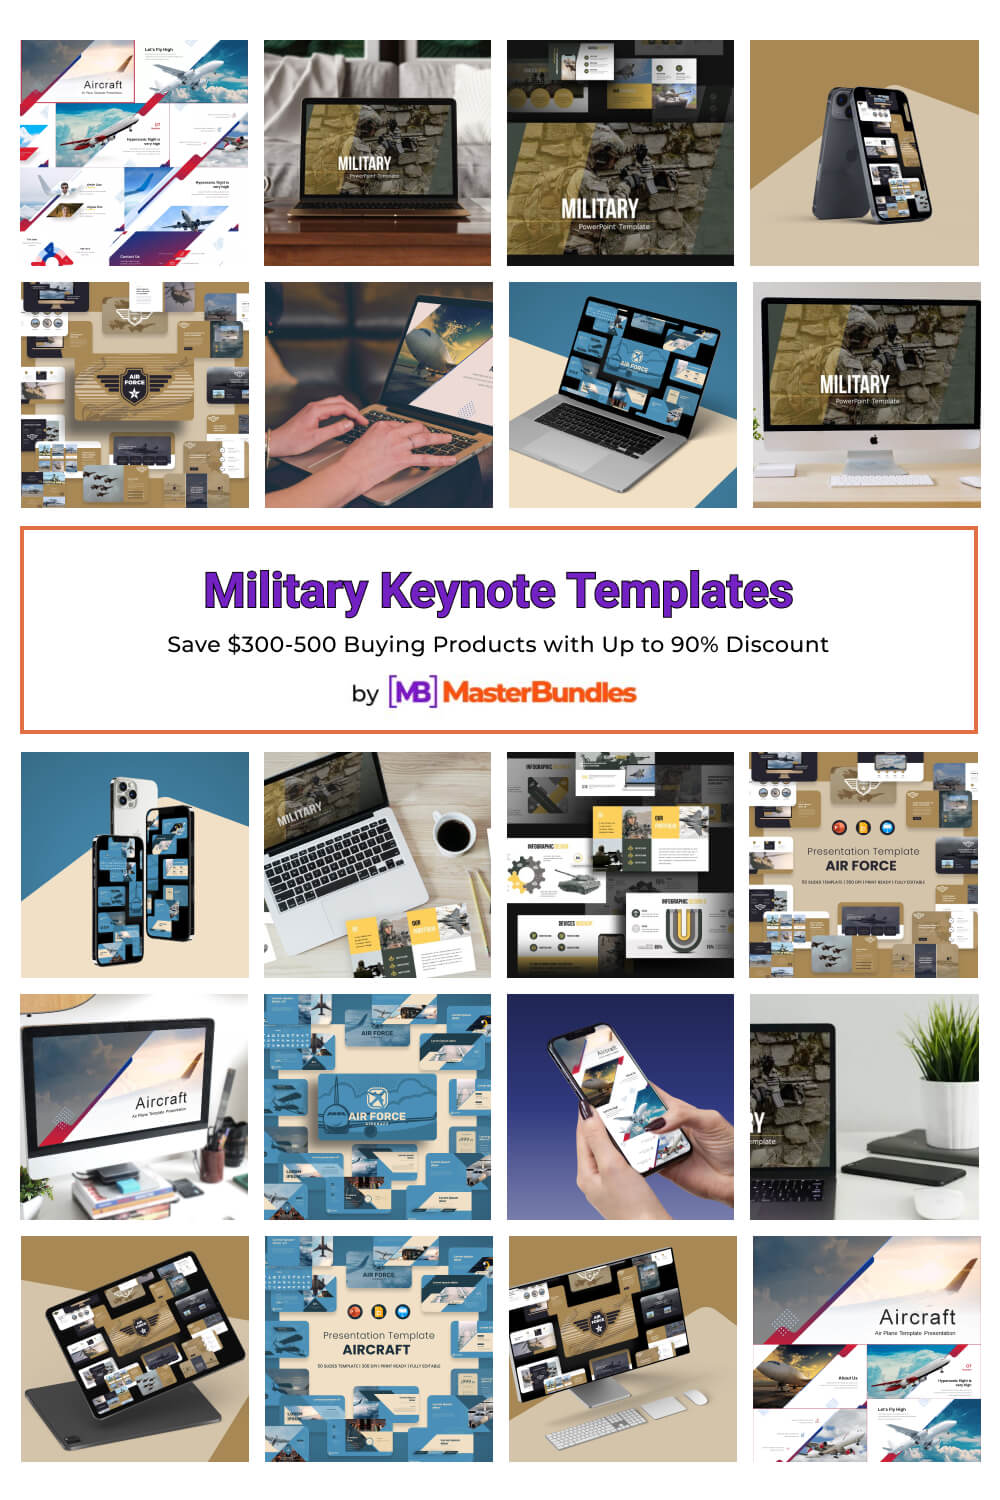 military keynote templates pinterest image.